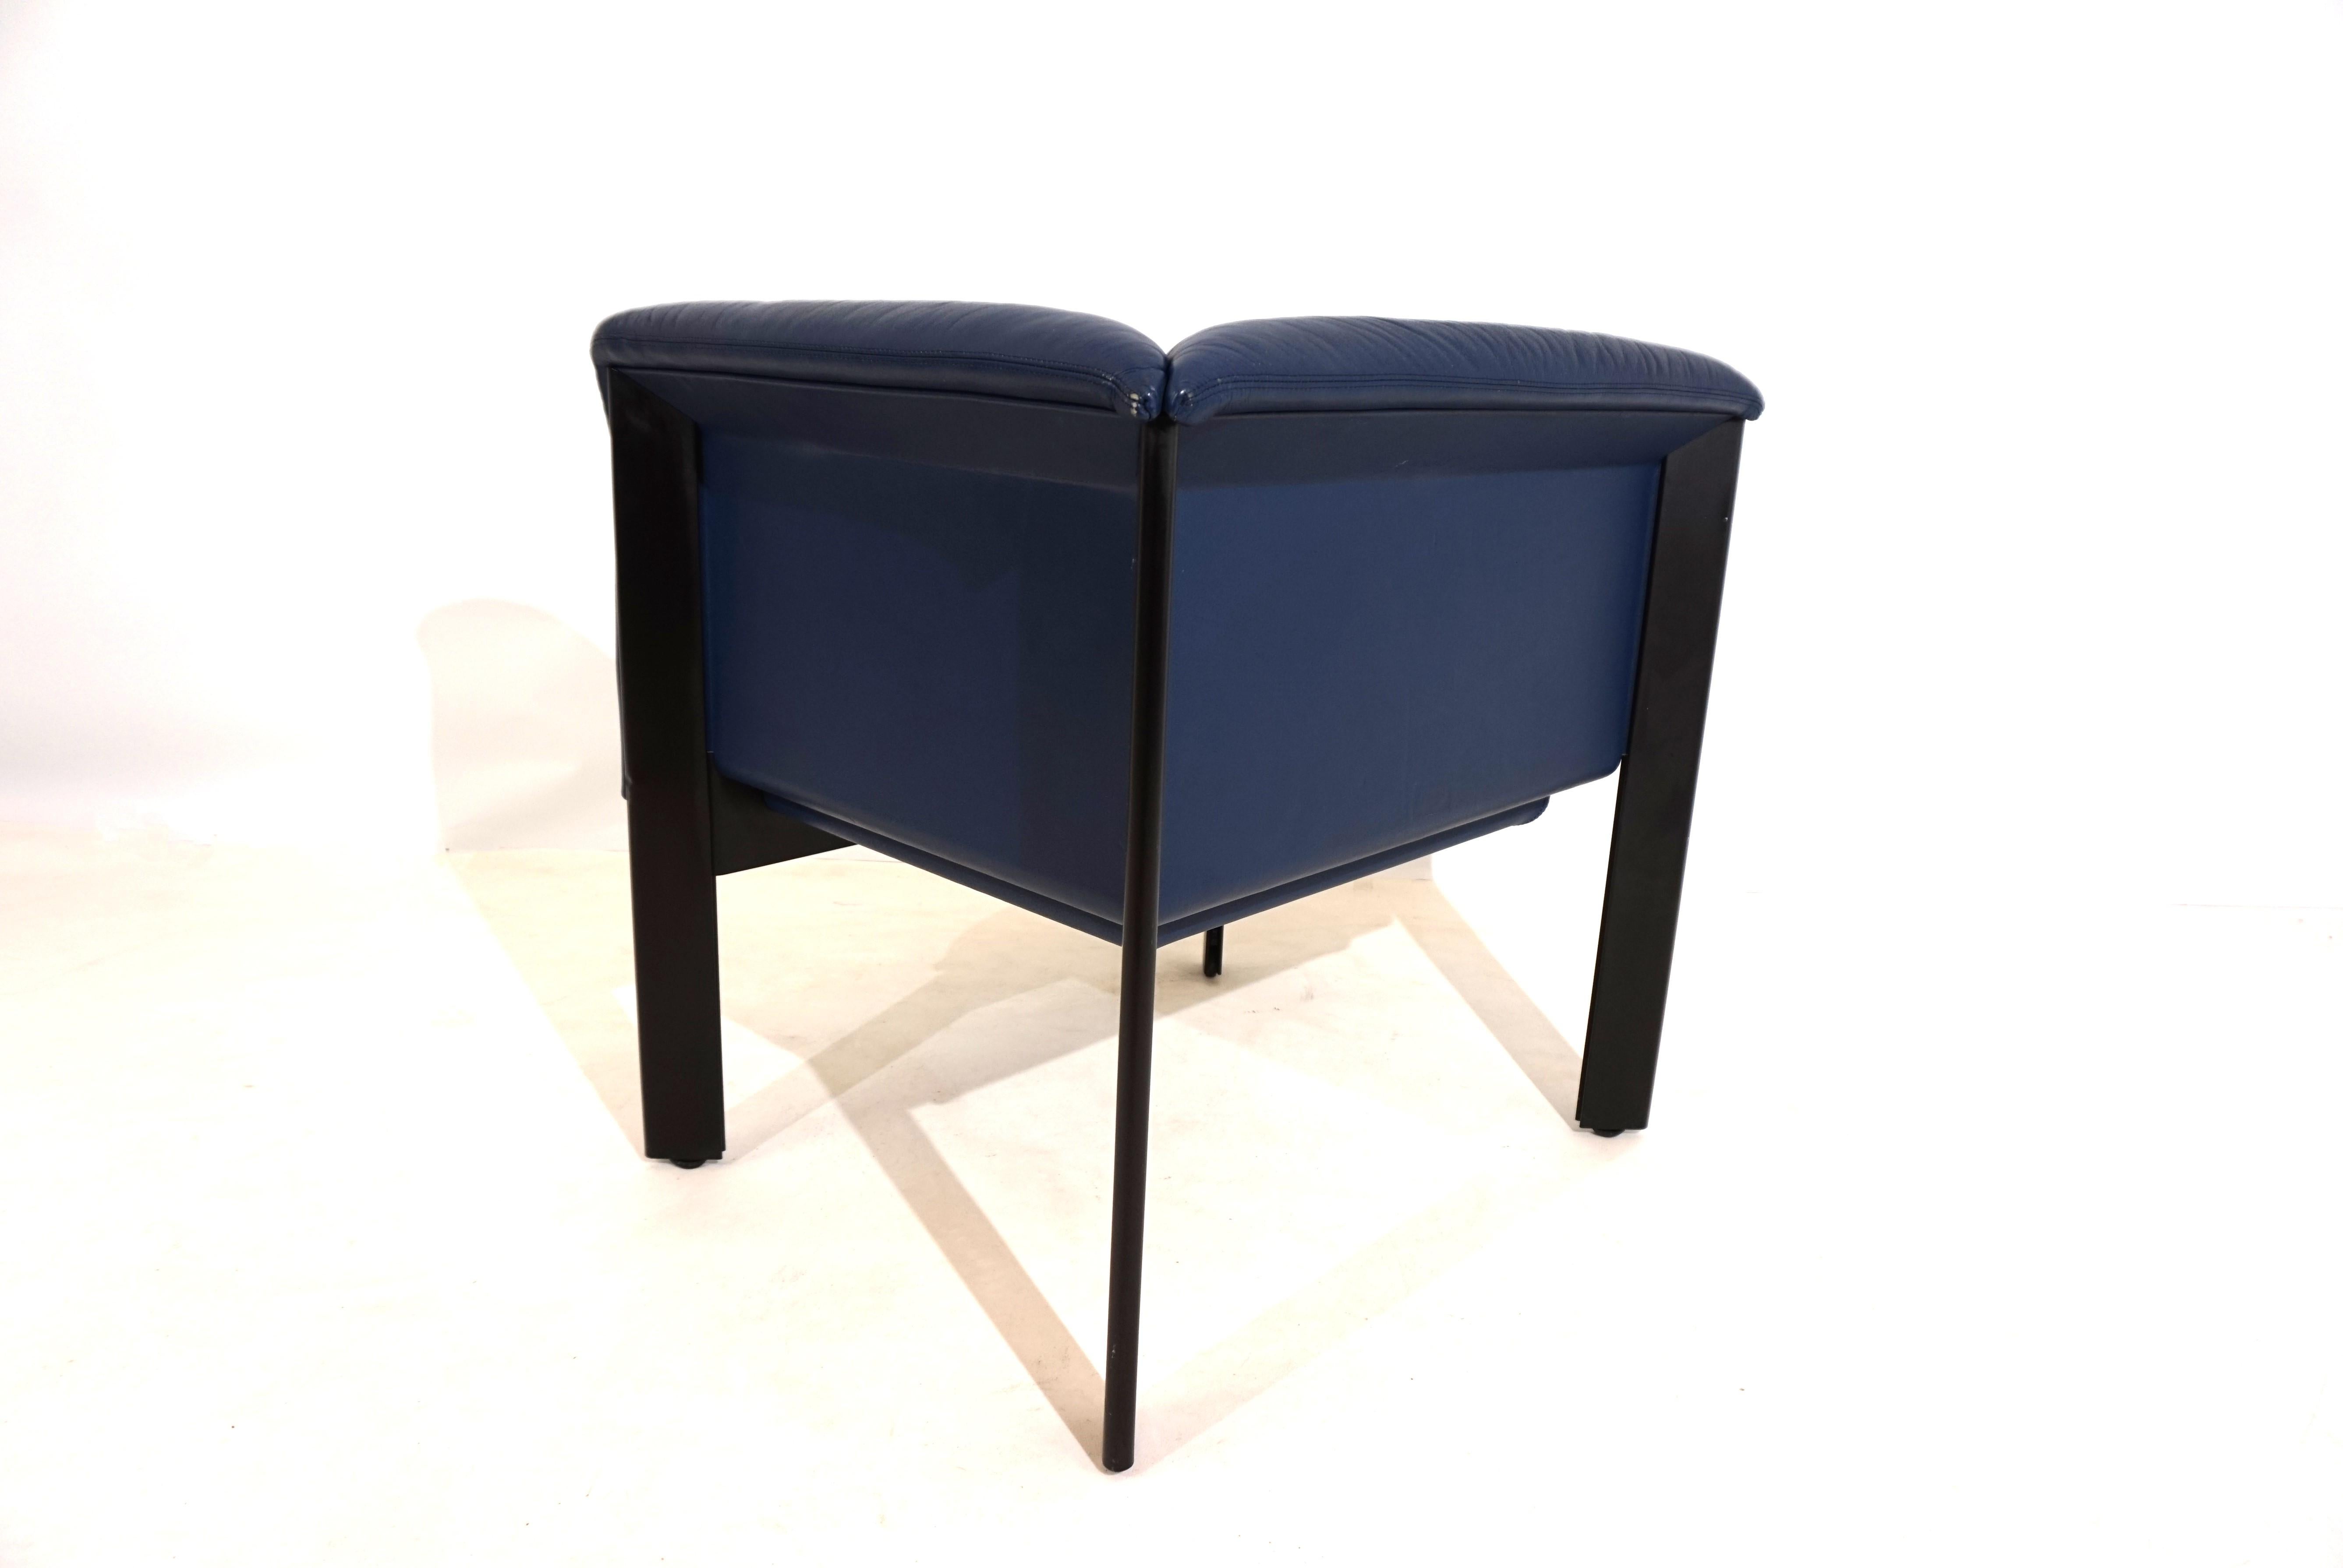 Poltrona Frau Interlude leather armchair by Marco Zanuso For Sale 13